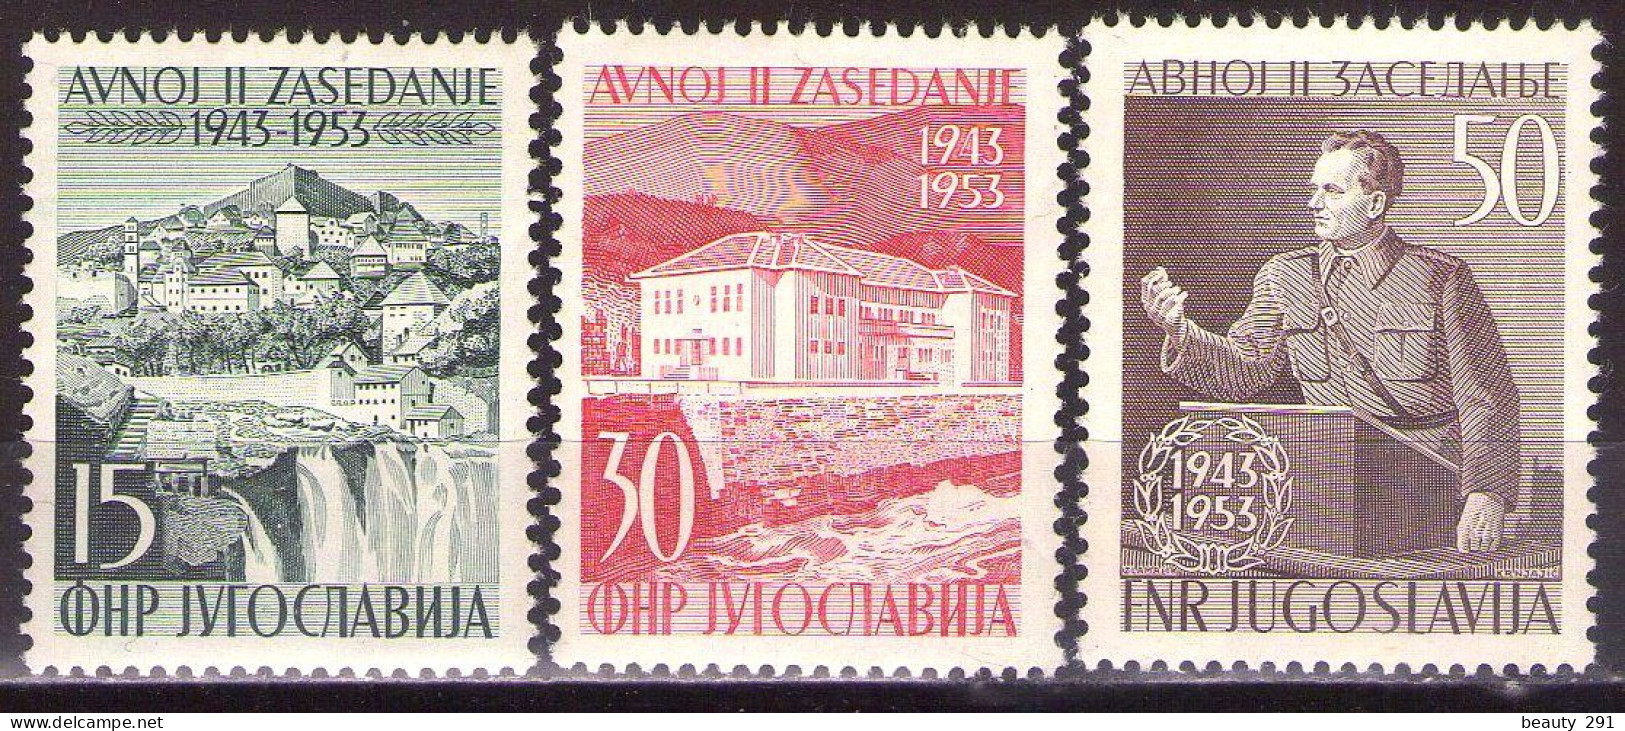 Yugoslavia 1953 -1st Republican Legislative Assembly AVNOJ II  - Mi 735-737 - MNH**VF - Ongebruikt